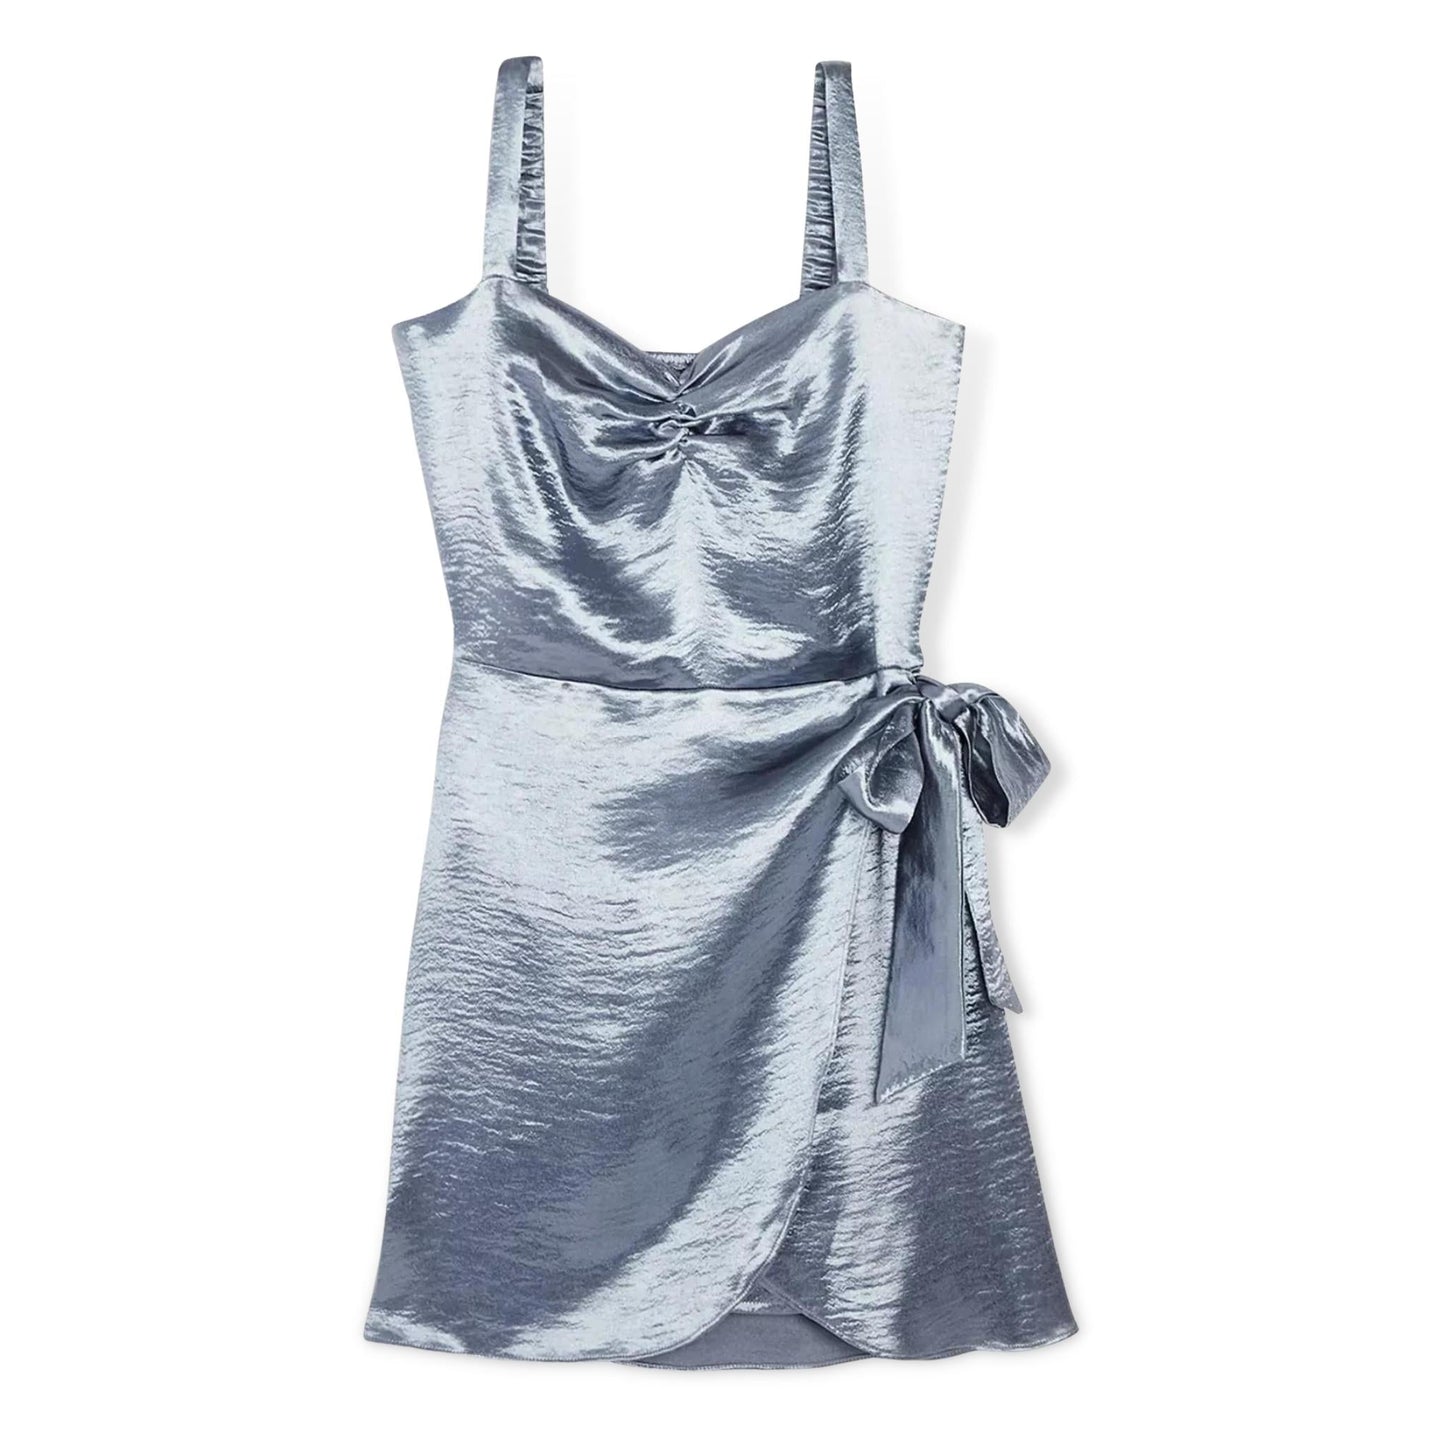 KatieJNYC Silver Alisha Dress - a Spirit Animal - Dress $90-$120 active Sep 2022 Apparel